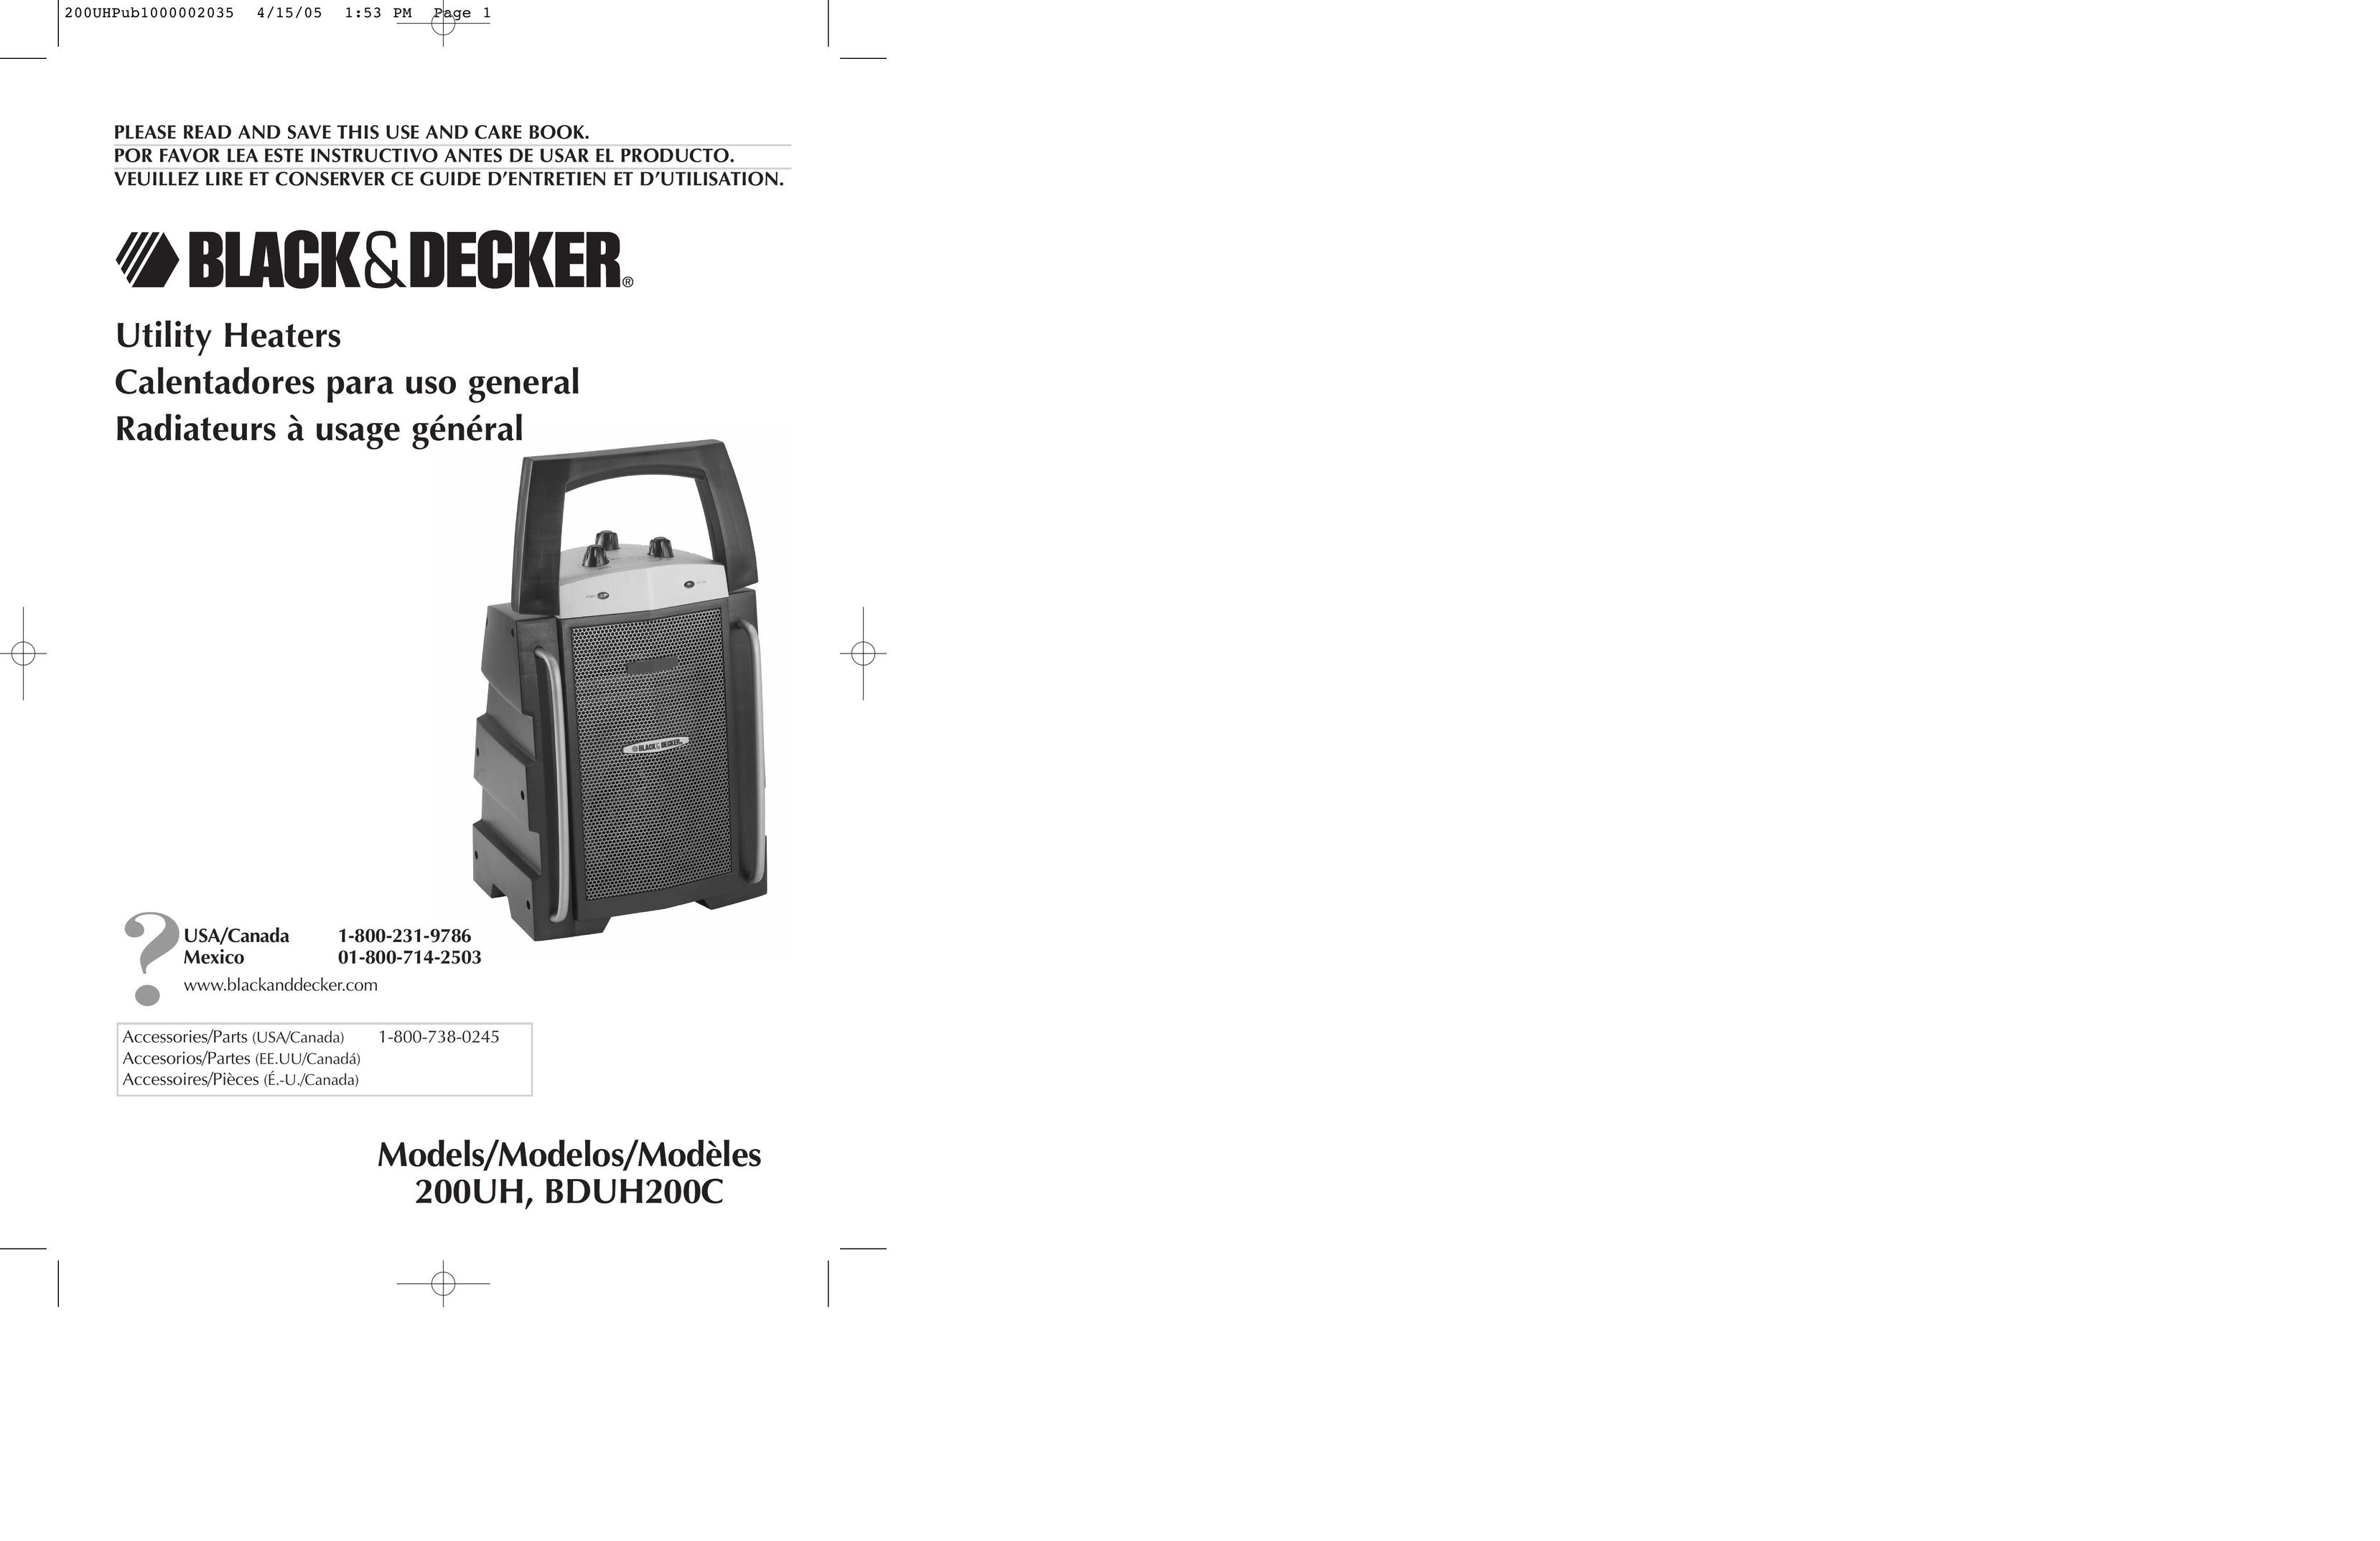 Black & Decker 200UH Electric Heater User Manual